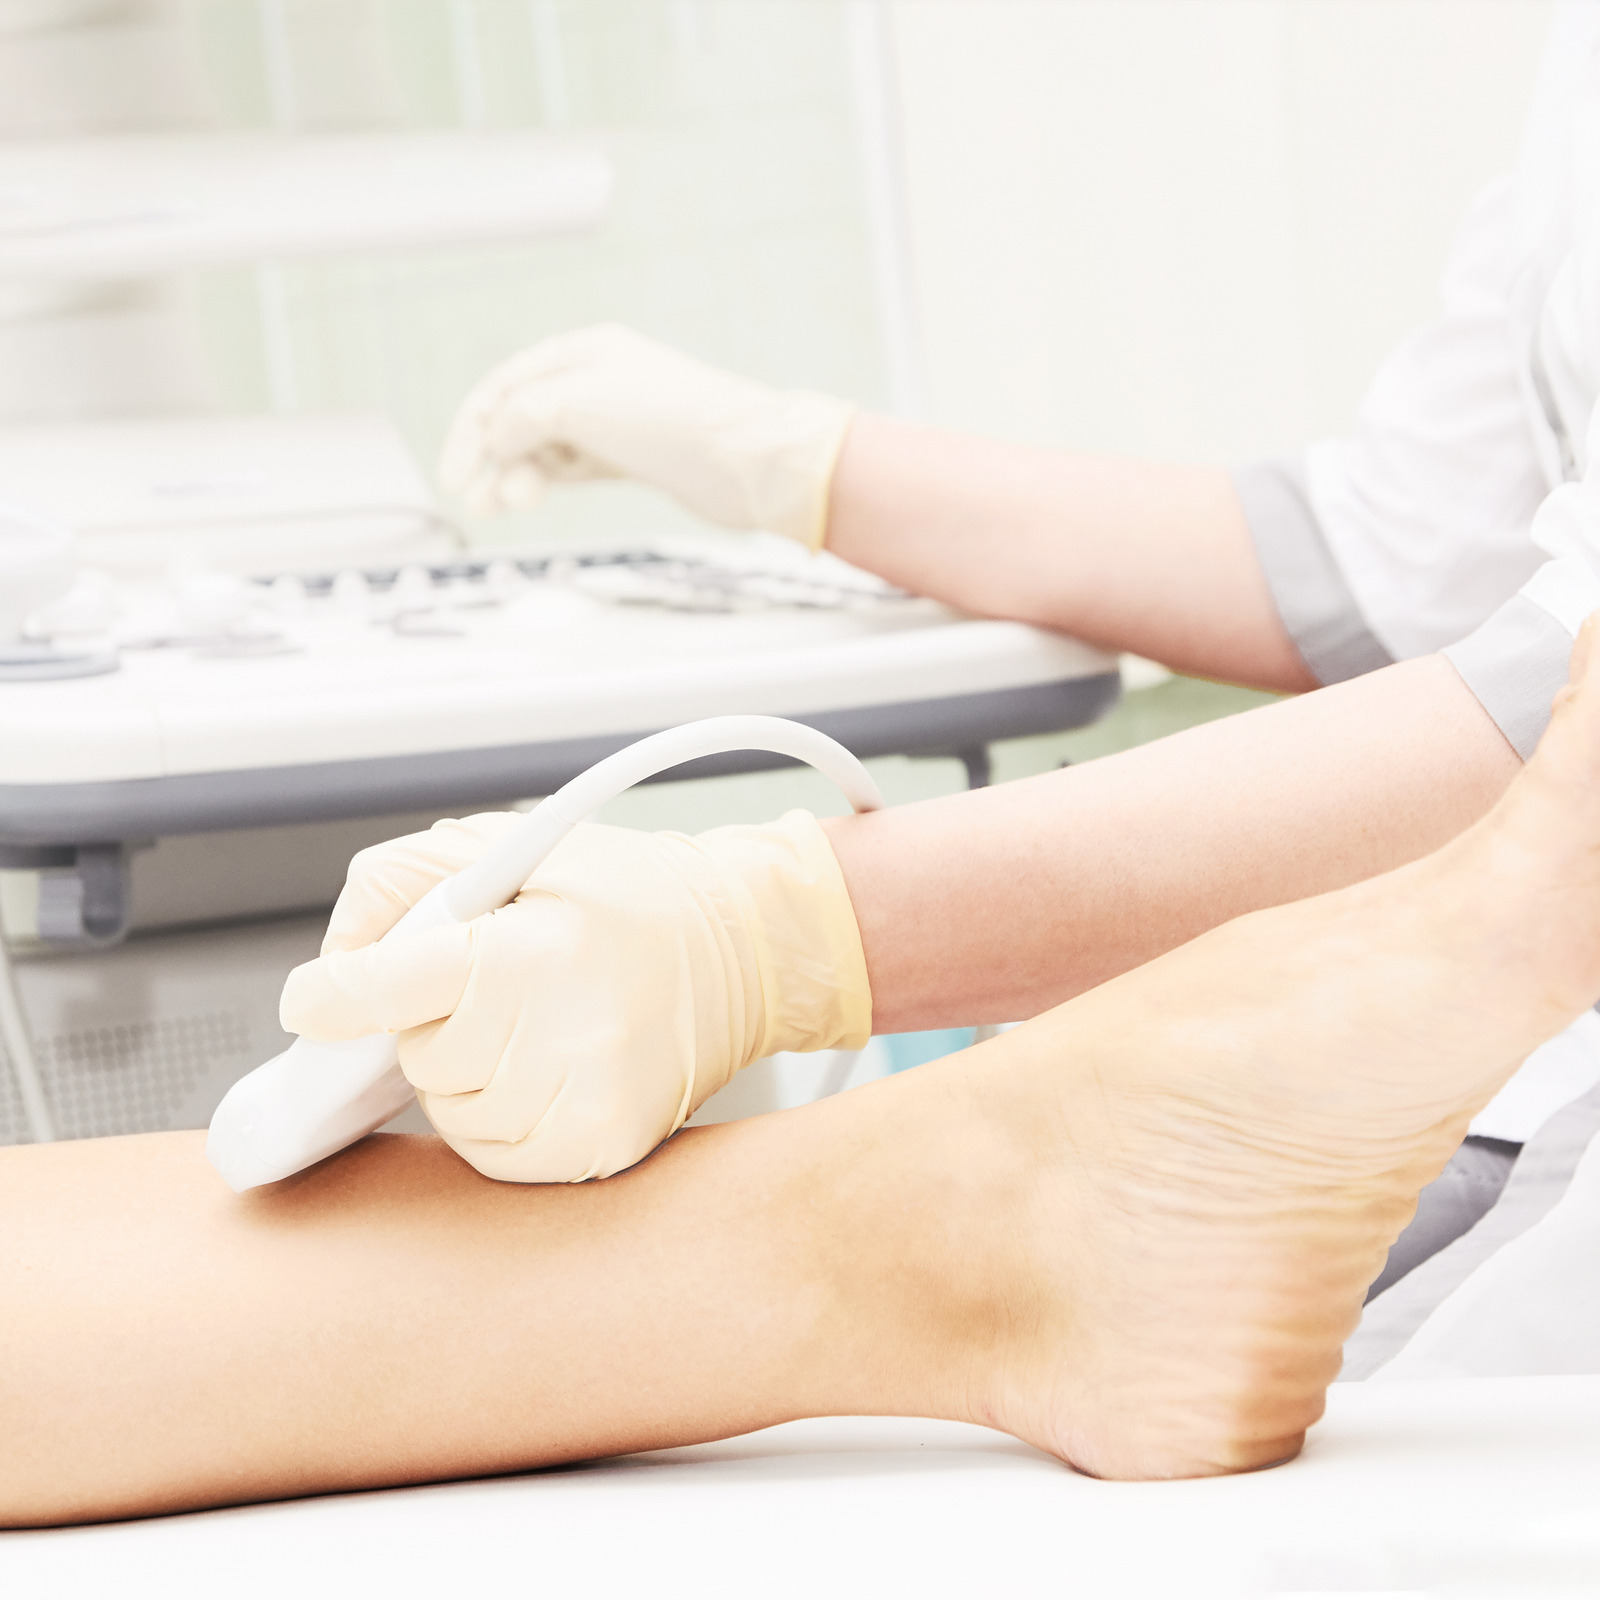 Doctor Ultrasound Knee Test. Scan Medical Equipment. Diagnosis Ultrasound Foot